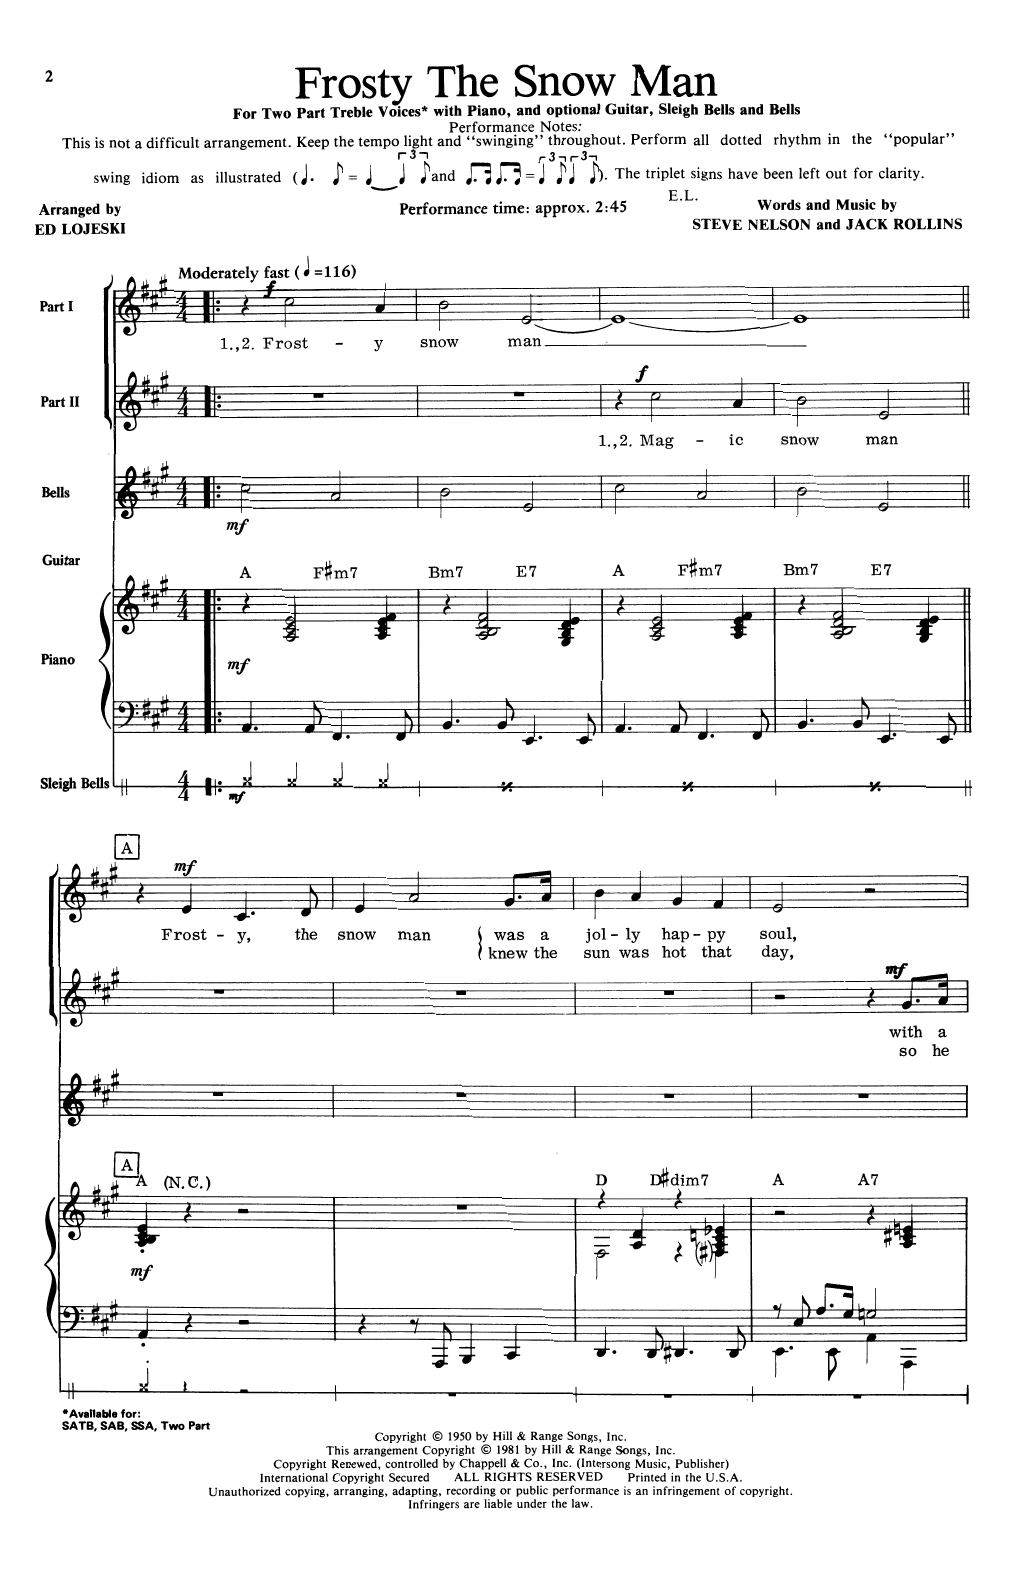 Jack Rollins & Steve Nelson Frosty The Snow Man (arr. Ed Lojeski) Sheet Music Notes & Chords for SSA Choir - Download or Print PDF